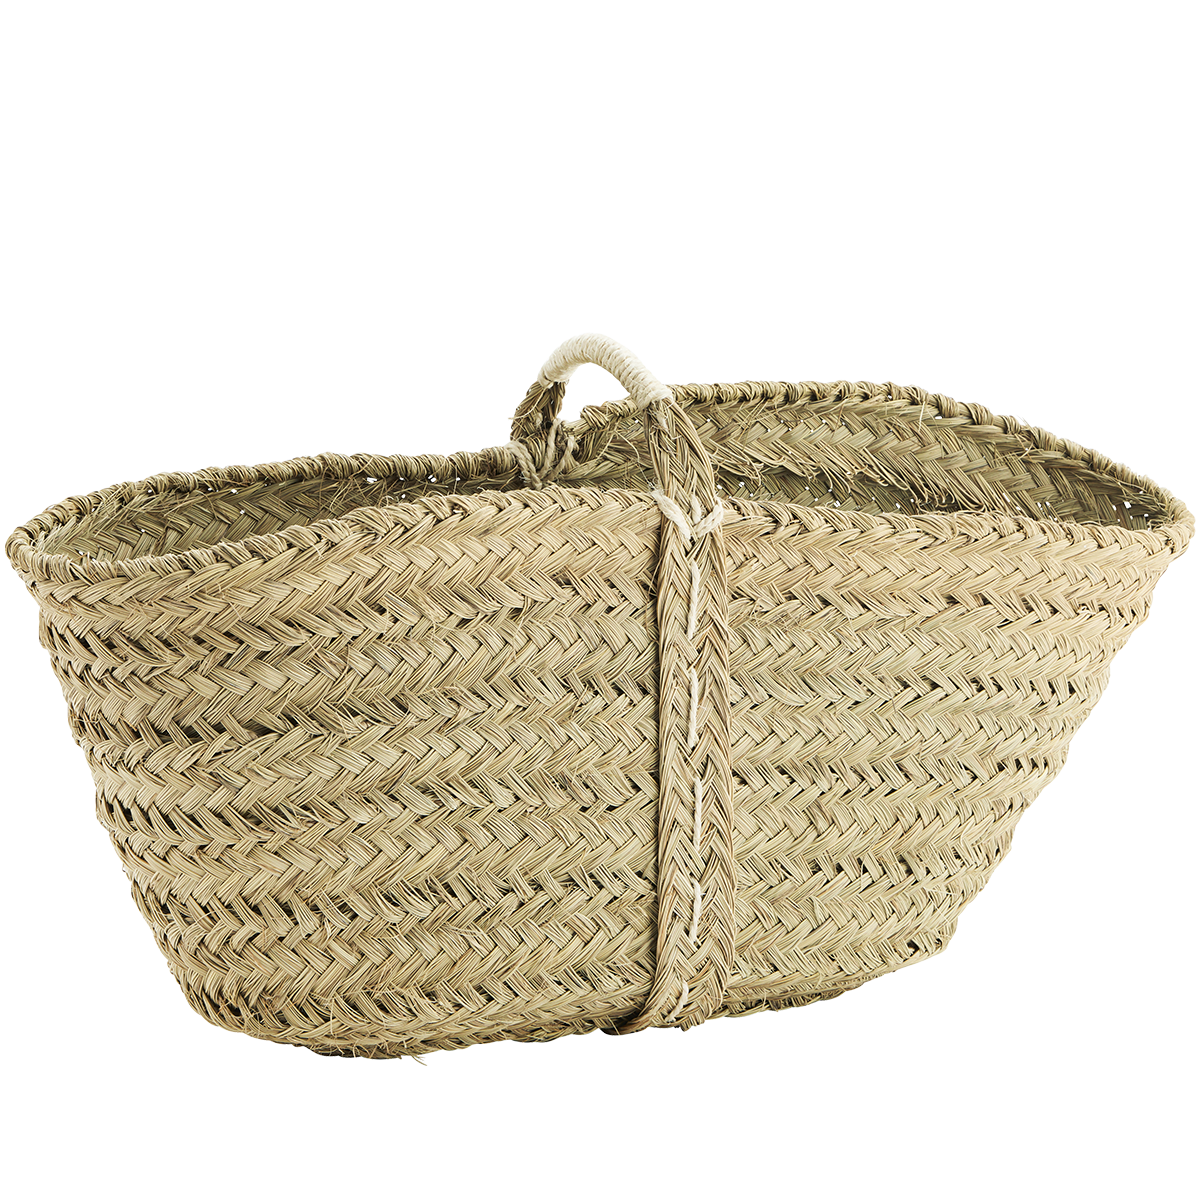 Grass basket w/ handle